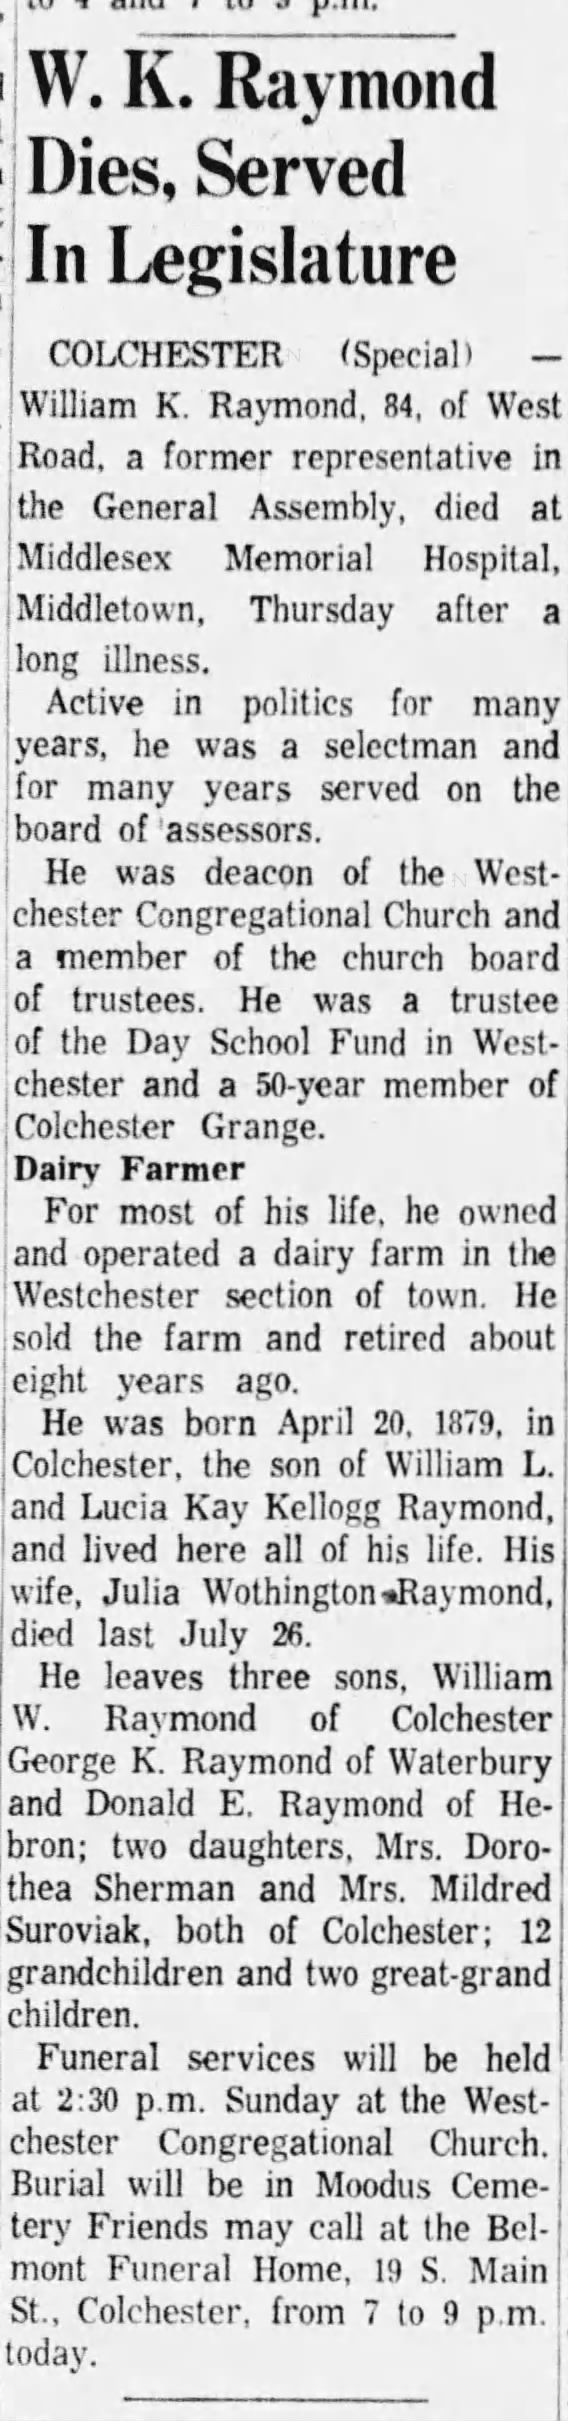 Obituary, W K Raymond, 1963